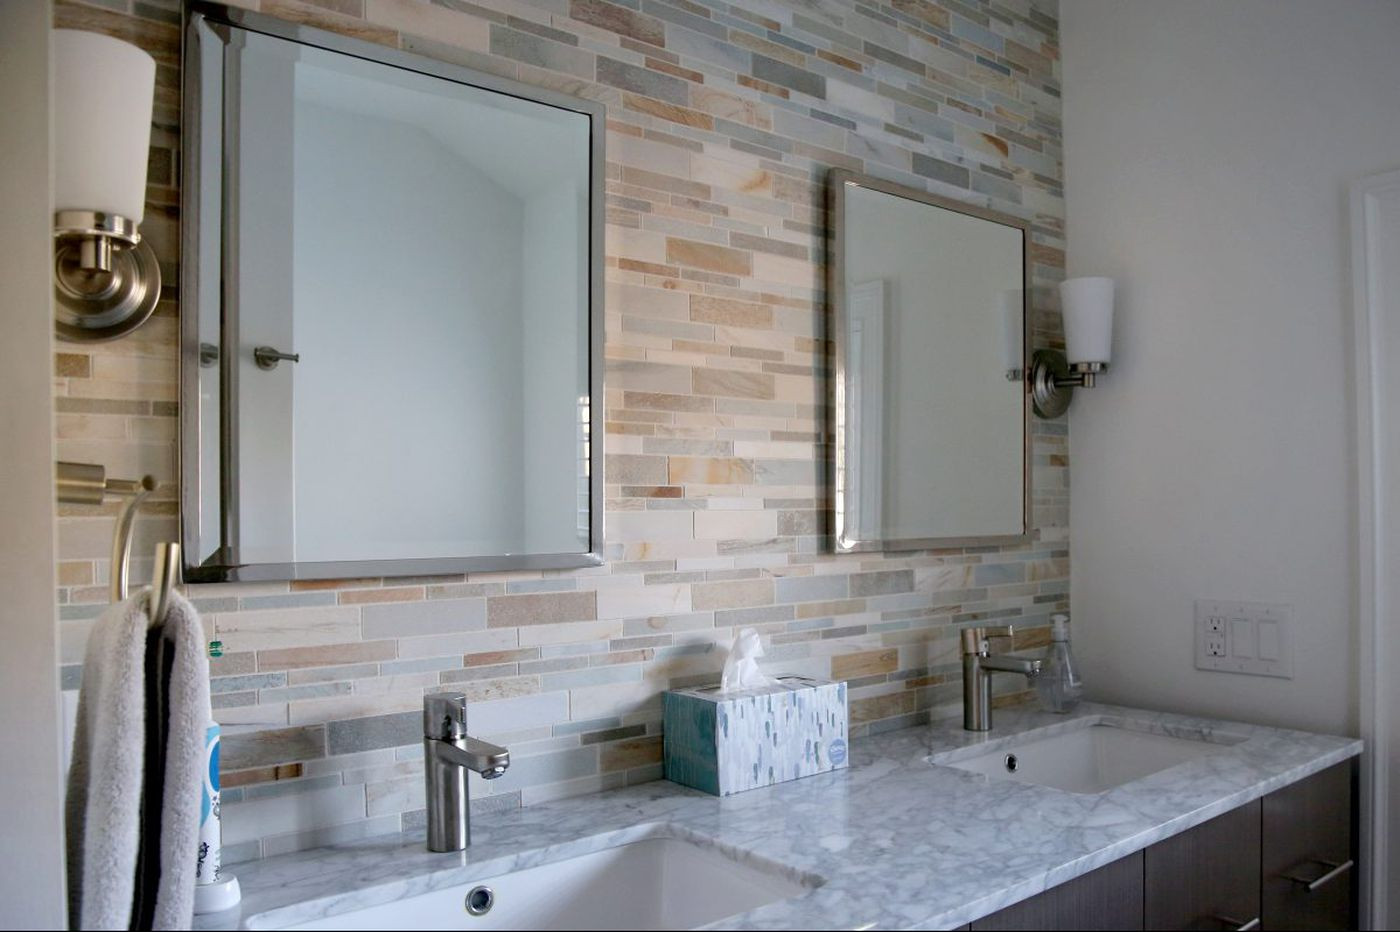 Bath Kitchen And Tile
 How kitchen backsplashes and bathroom tile can make an